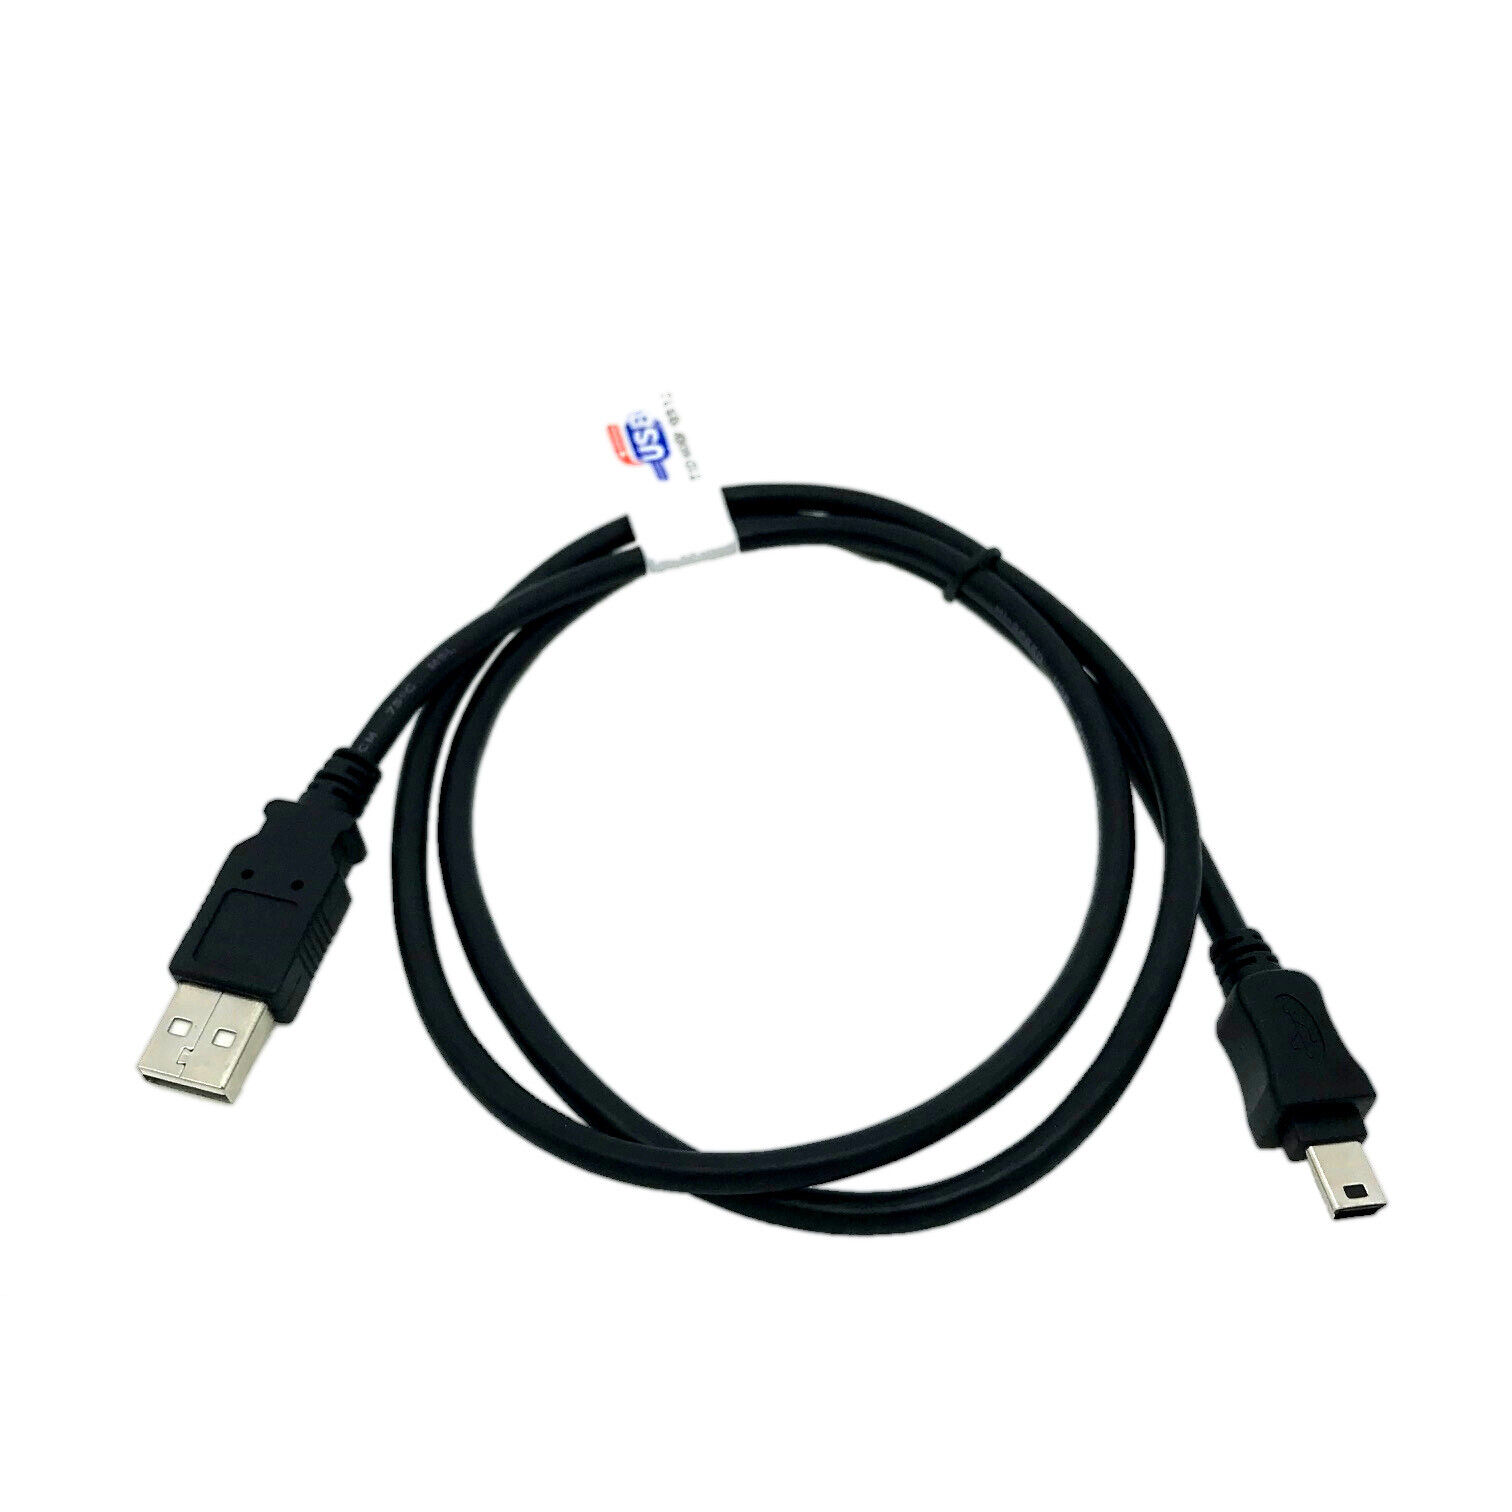 3 Ft USB Cord Cable for NEXTAR GPS X3-ELITE X3-T X3B X3E X3i X4-T X4B